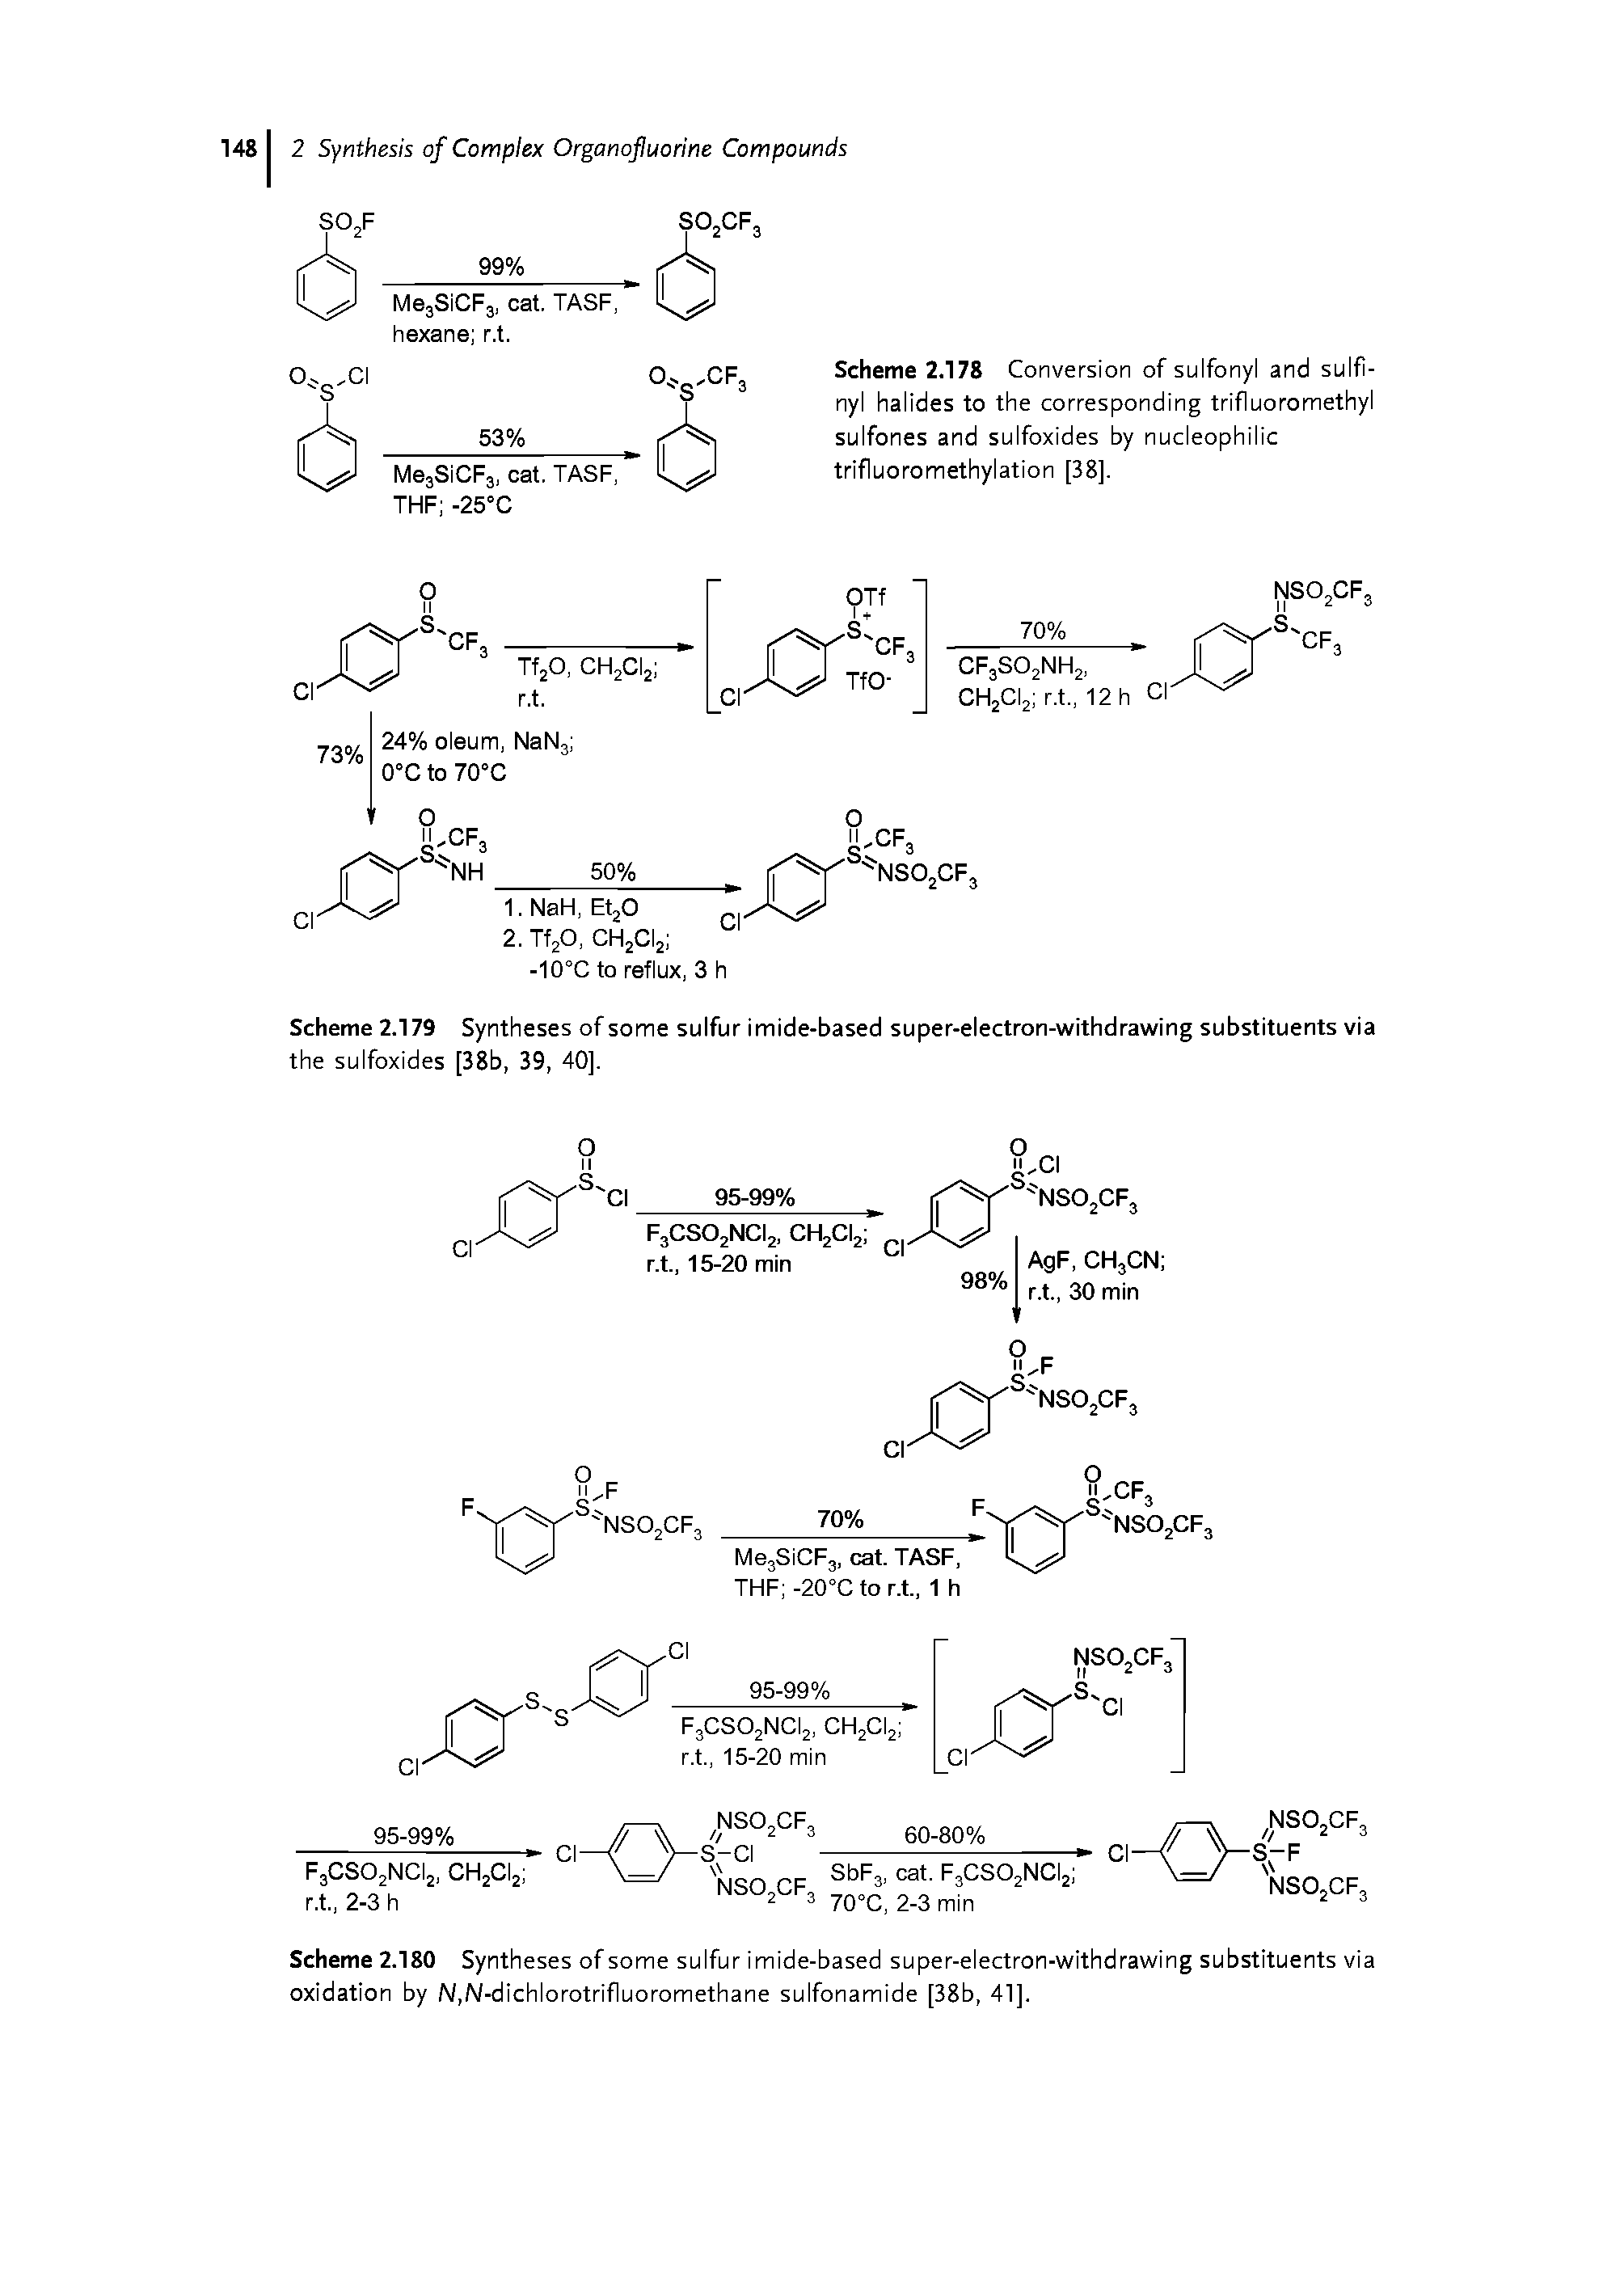 Scheme 2.178 Conversion of sulfonyl and sulfinyl halides to the corresponding trifluoromethyl sulfones and sulfoxides by nucleophilic trifluoromethylation [38].